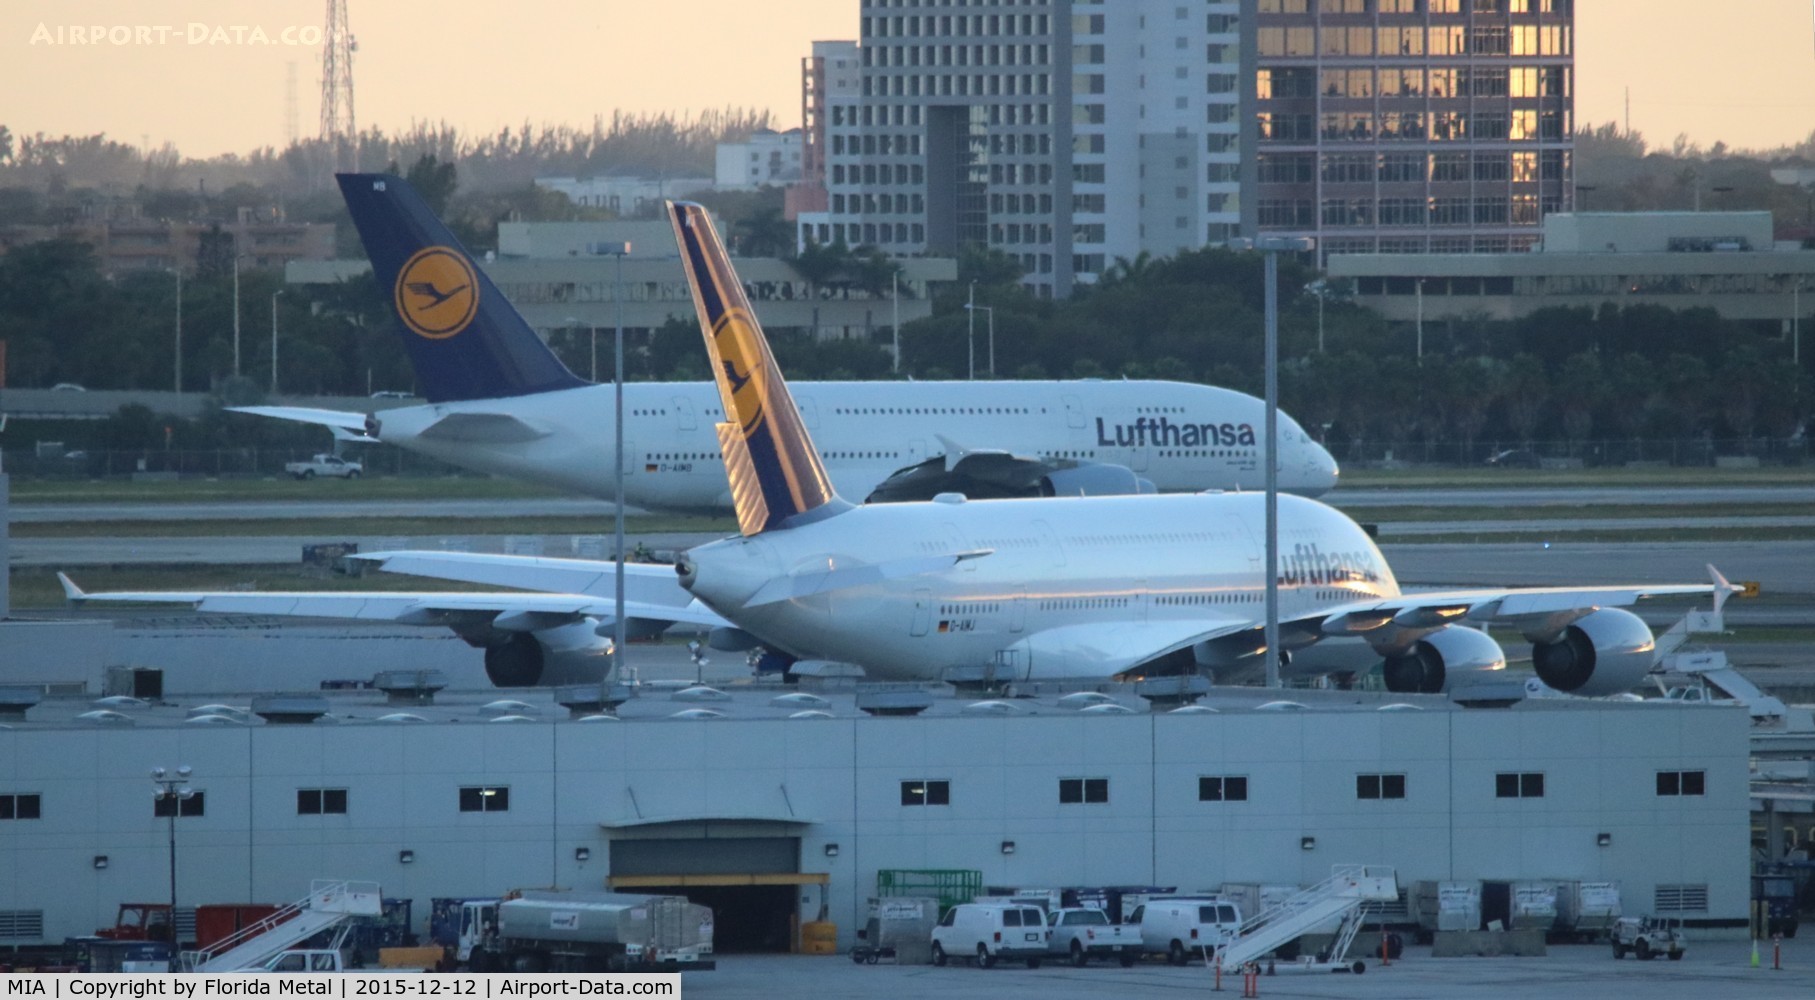 Miami International Airport (MIA) - Two A380s